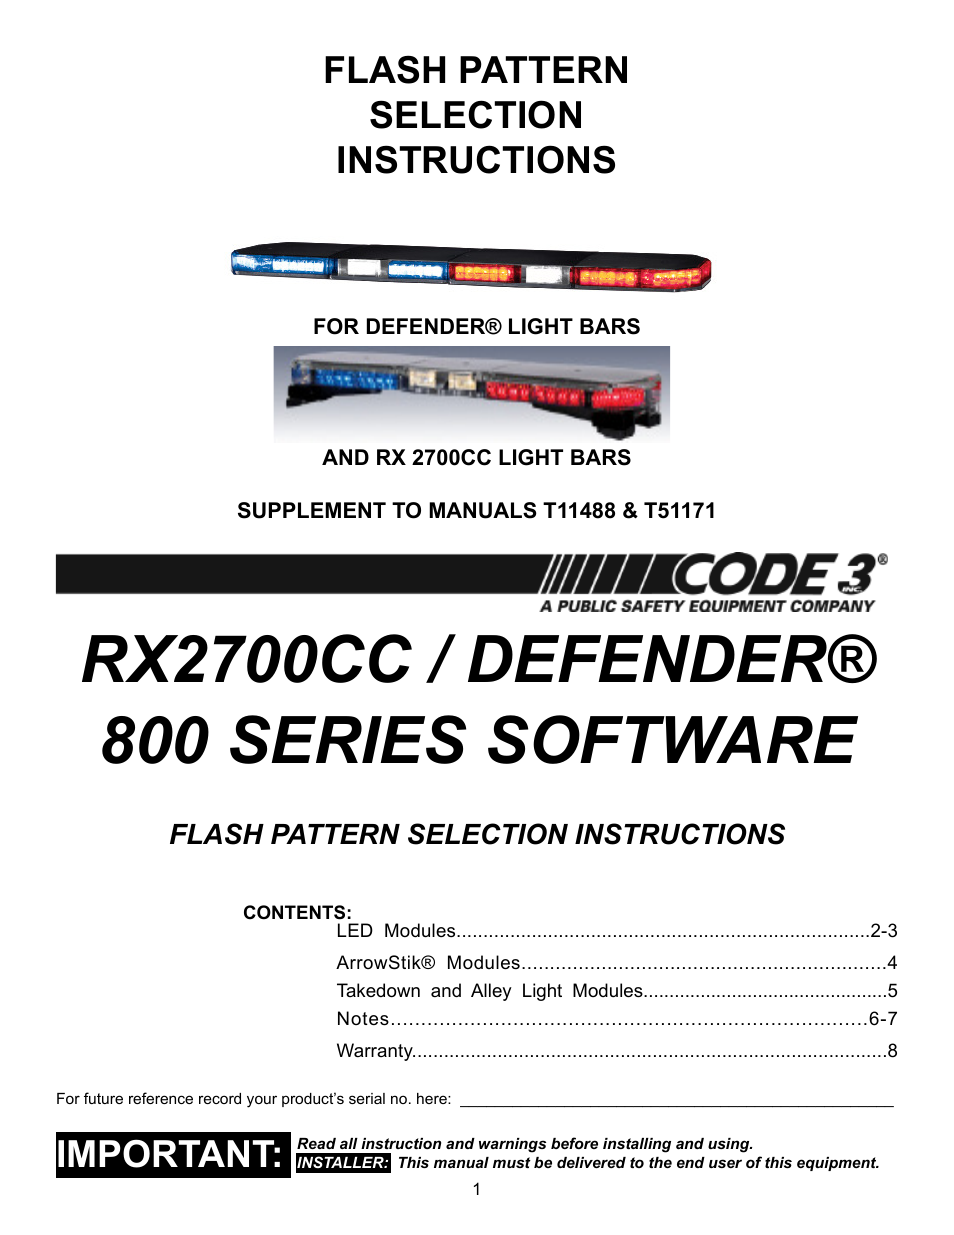 800 Series Software